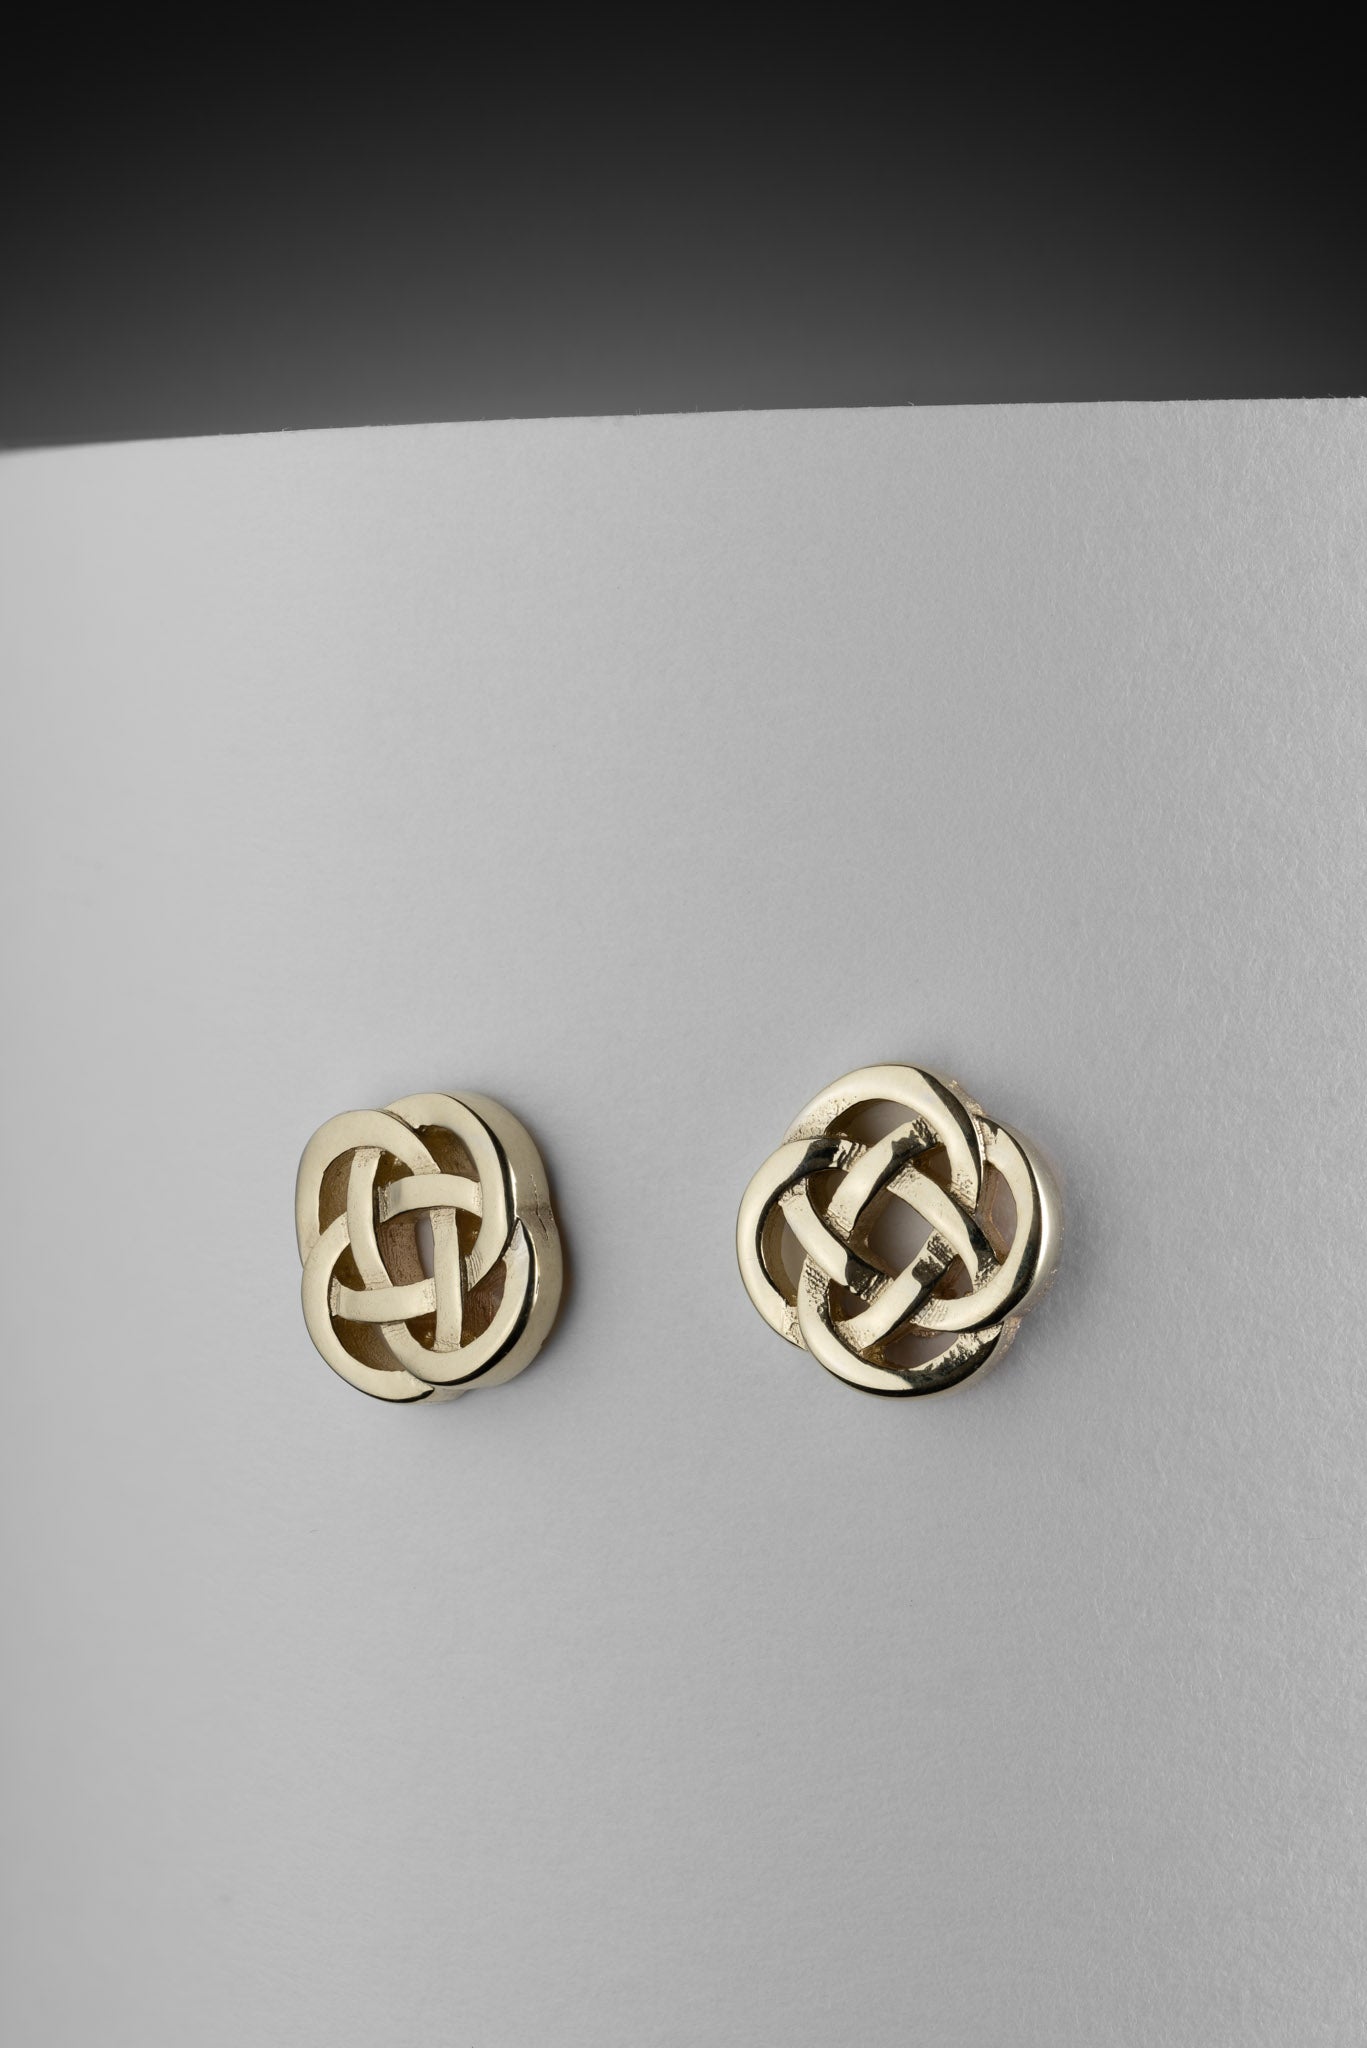 gold celtic knot earrings on white background